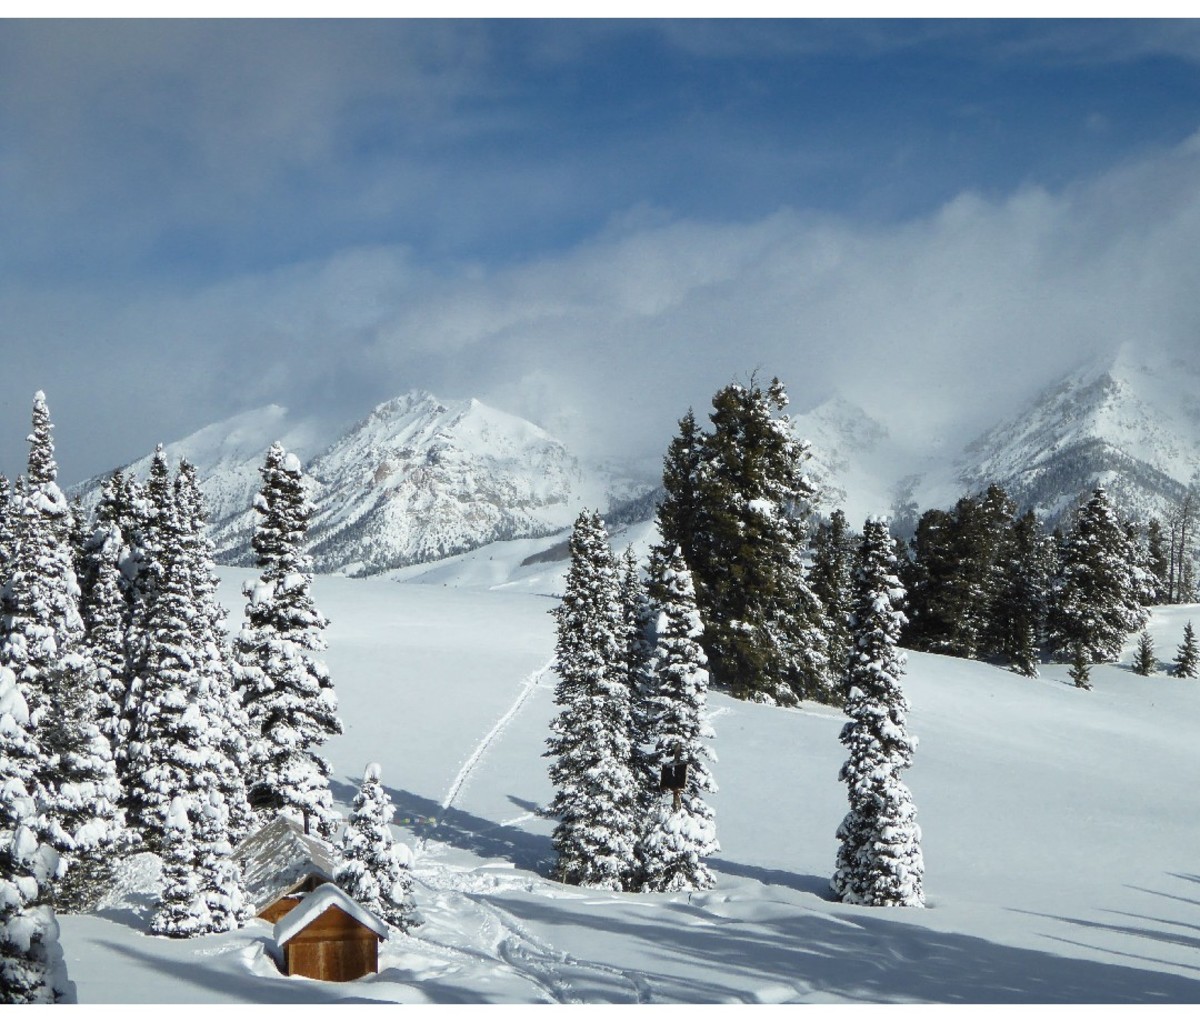 Tornak Hut nestled on a snowy mountainside in Sun Valley, Idaho